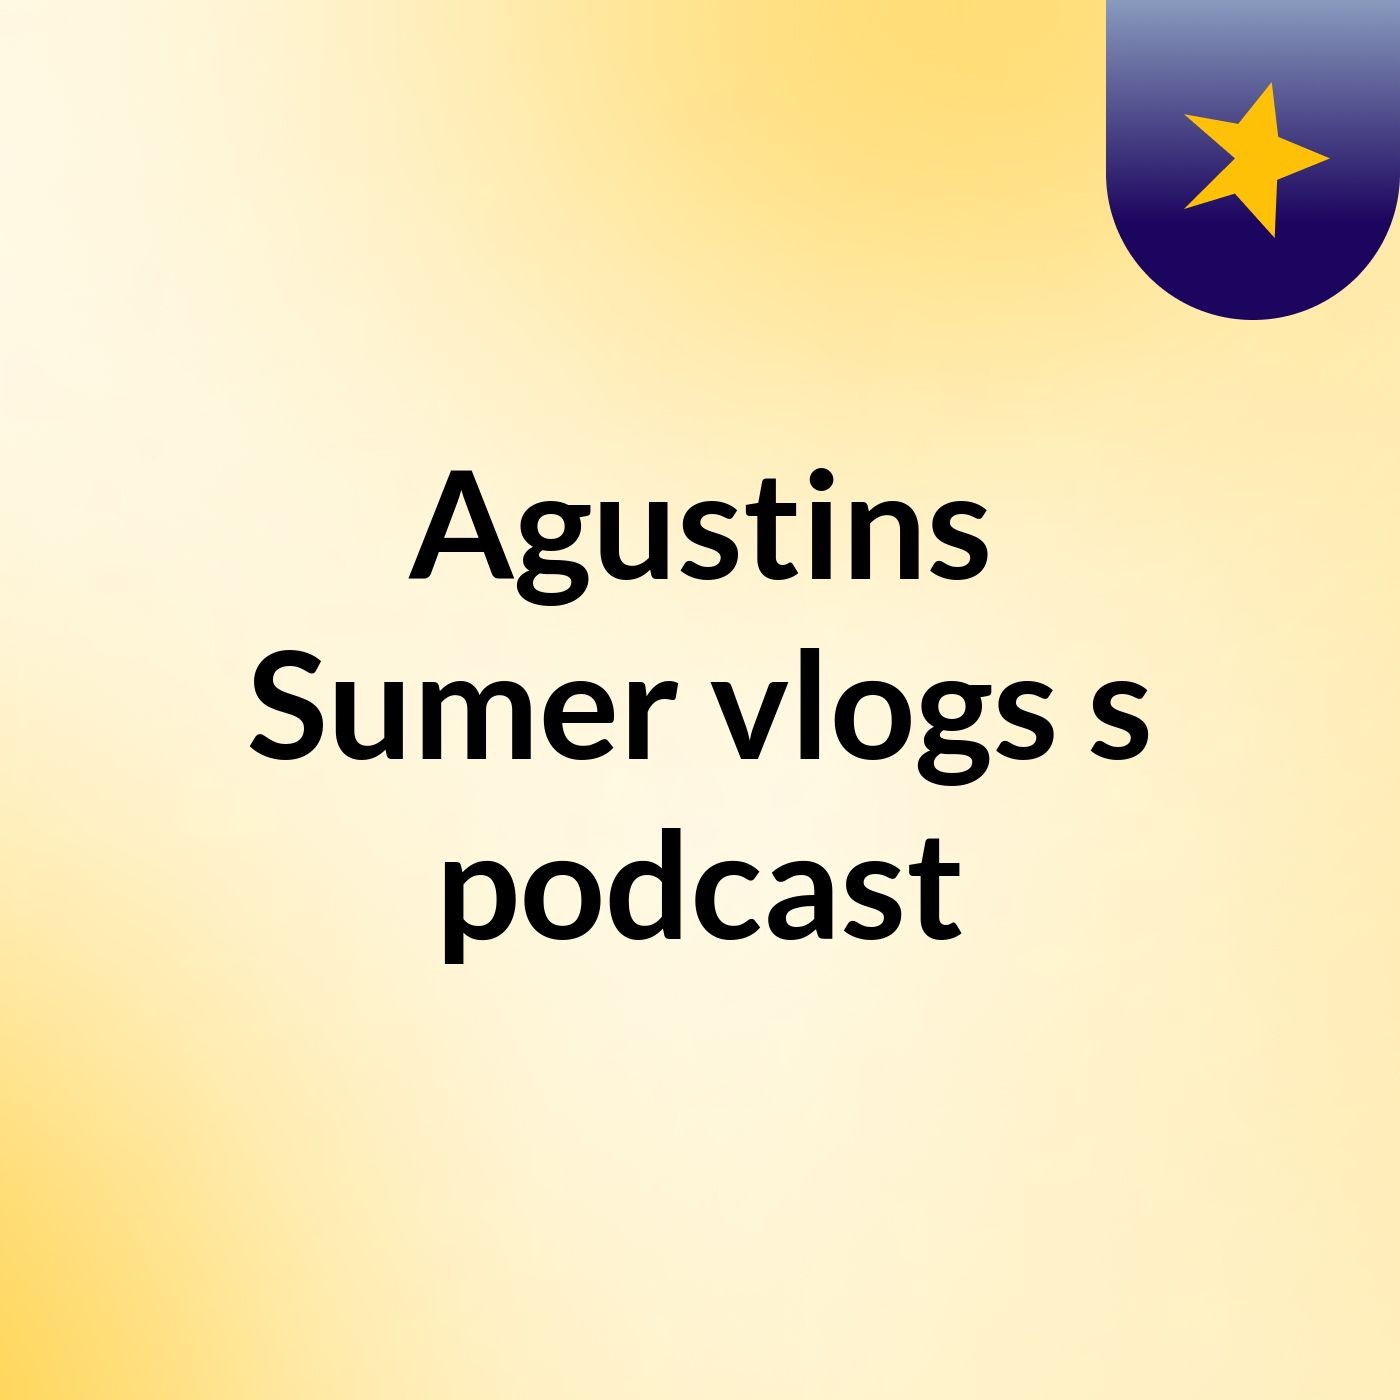 Agustins Sumer vlogs's podcast